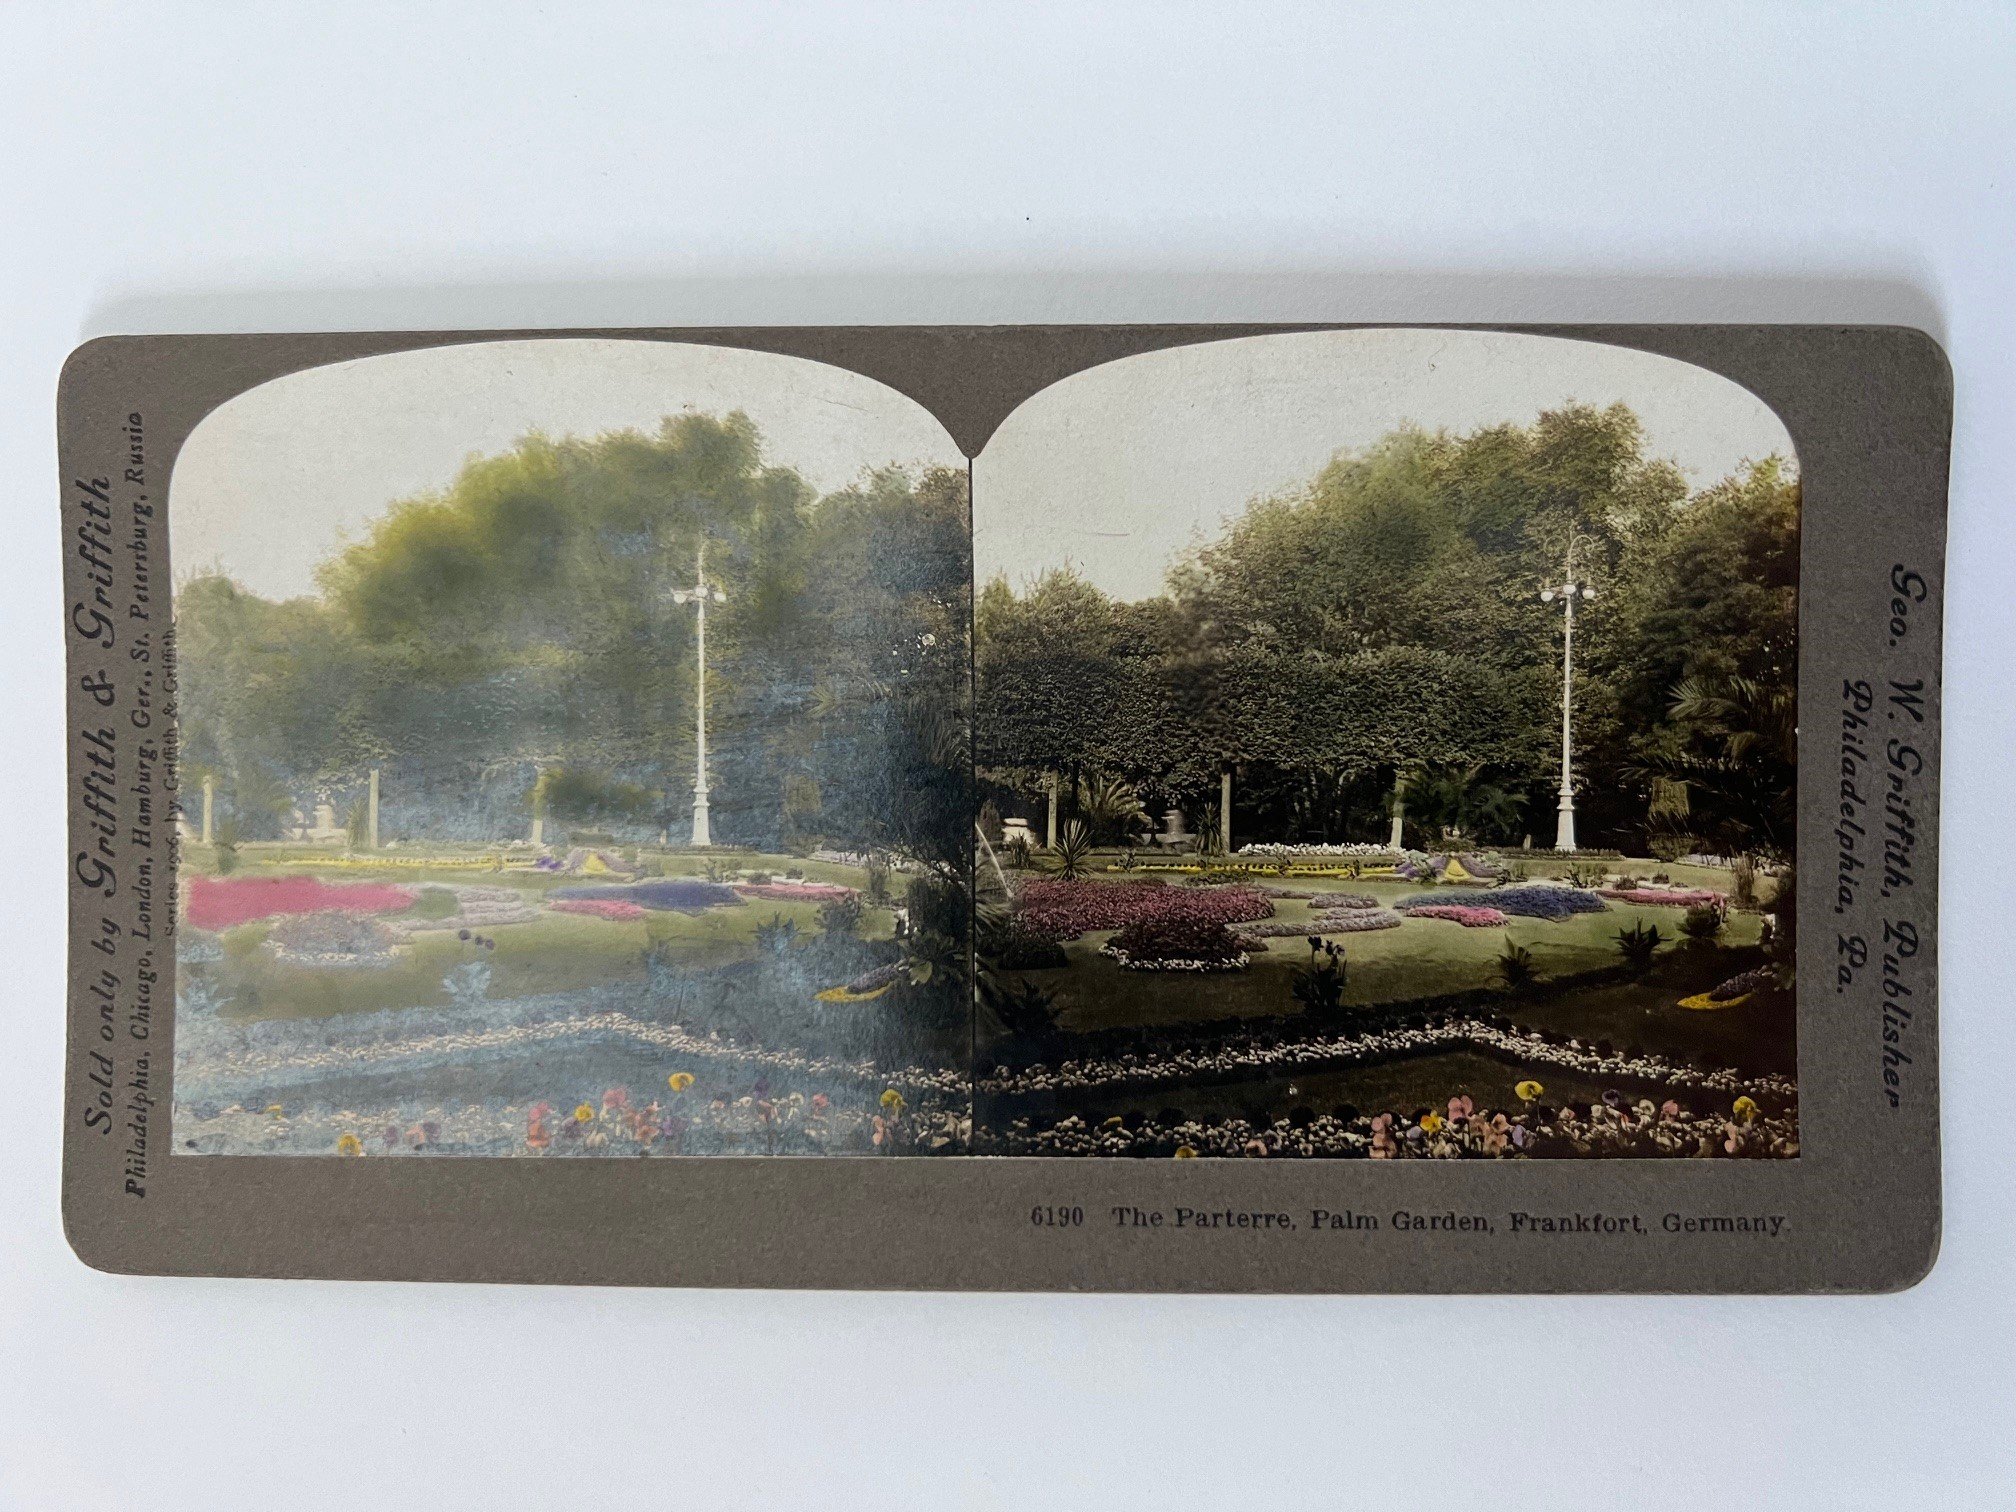 Stereobild, Griffith & Griffith, Frankfurt, Nr. 6190, The Parterre, Palm Garden, ca. 1912. (Taunus-Rhein-Main - Regionalgeschichtliche Sammlung Dr. Stefan Naas CC BY-NC-SA)